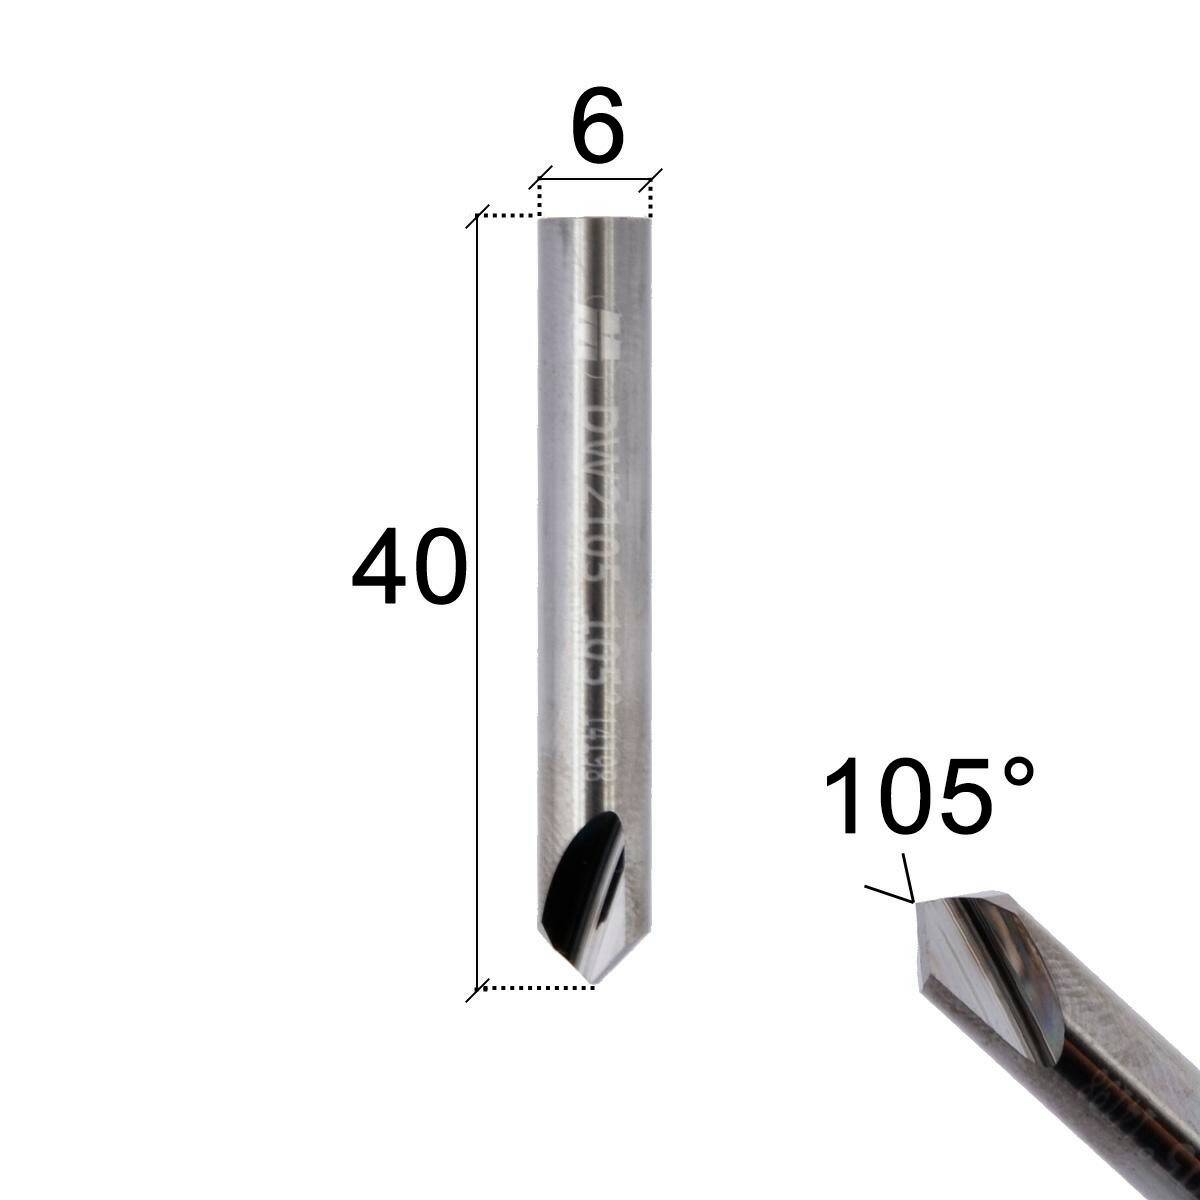 Finger cutter DW2105 - high temperature resistant